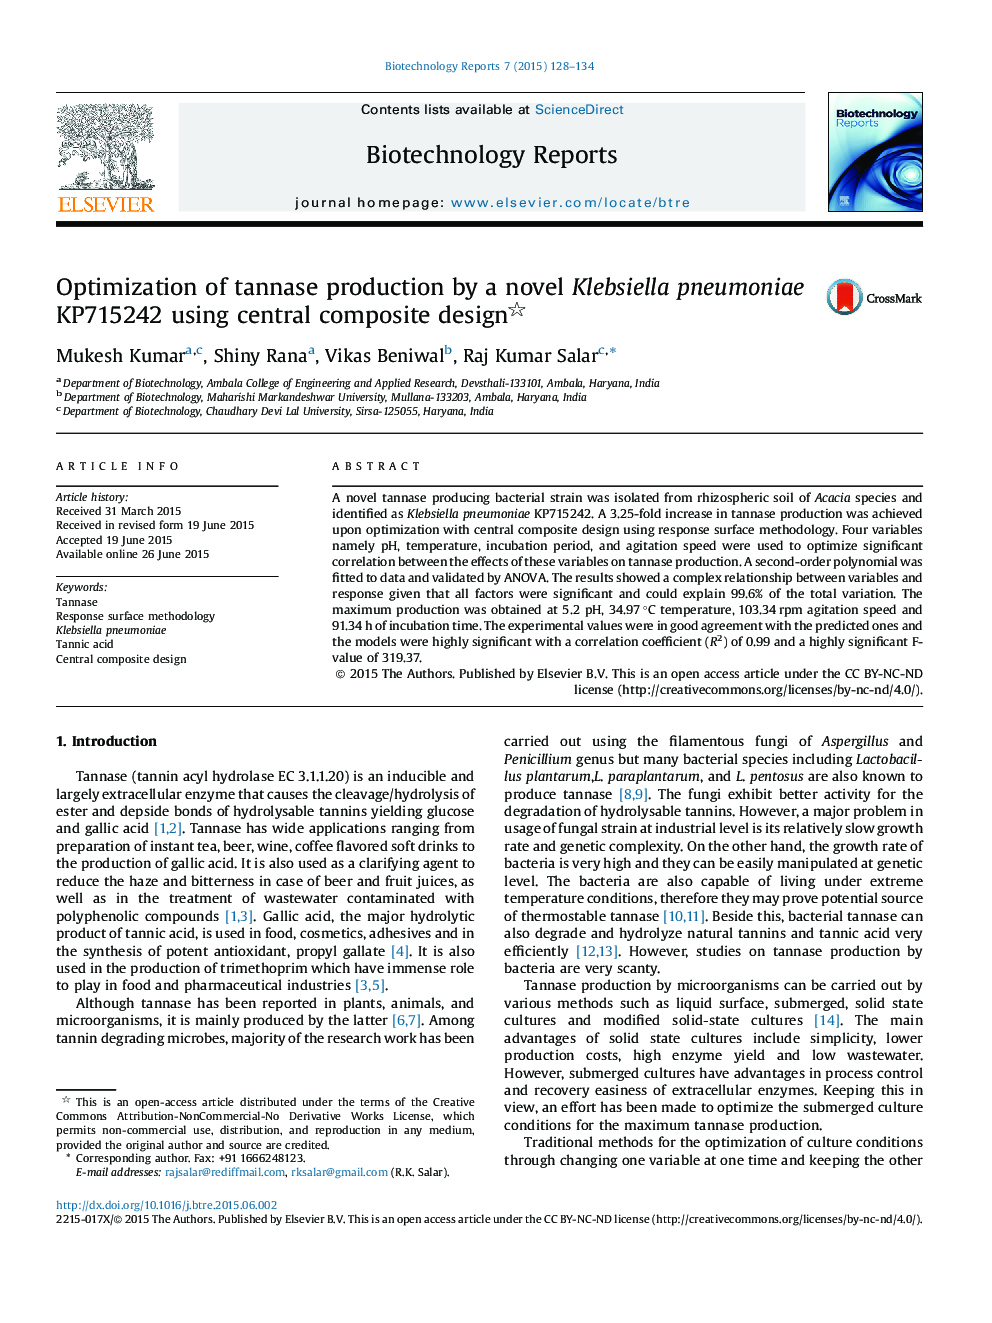 Optimization of tannase production by a novel Klebsiella pneumoniae KP715242 using central composite design 